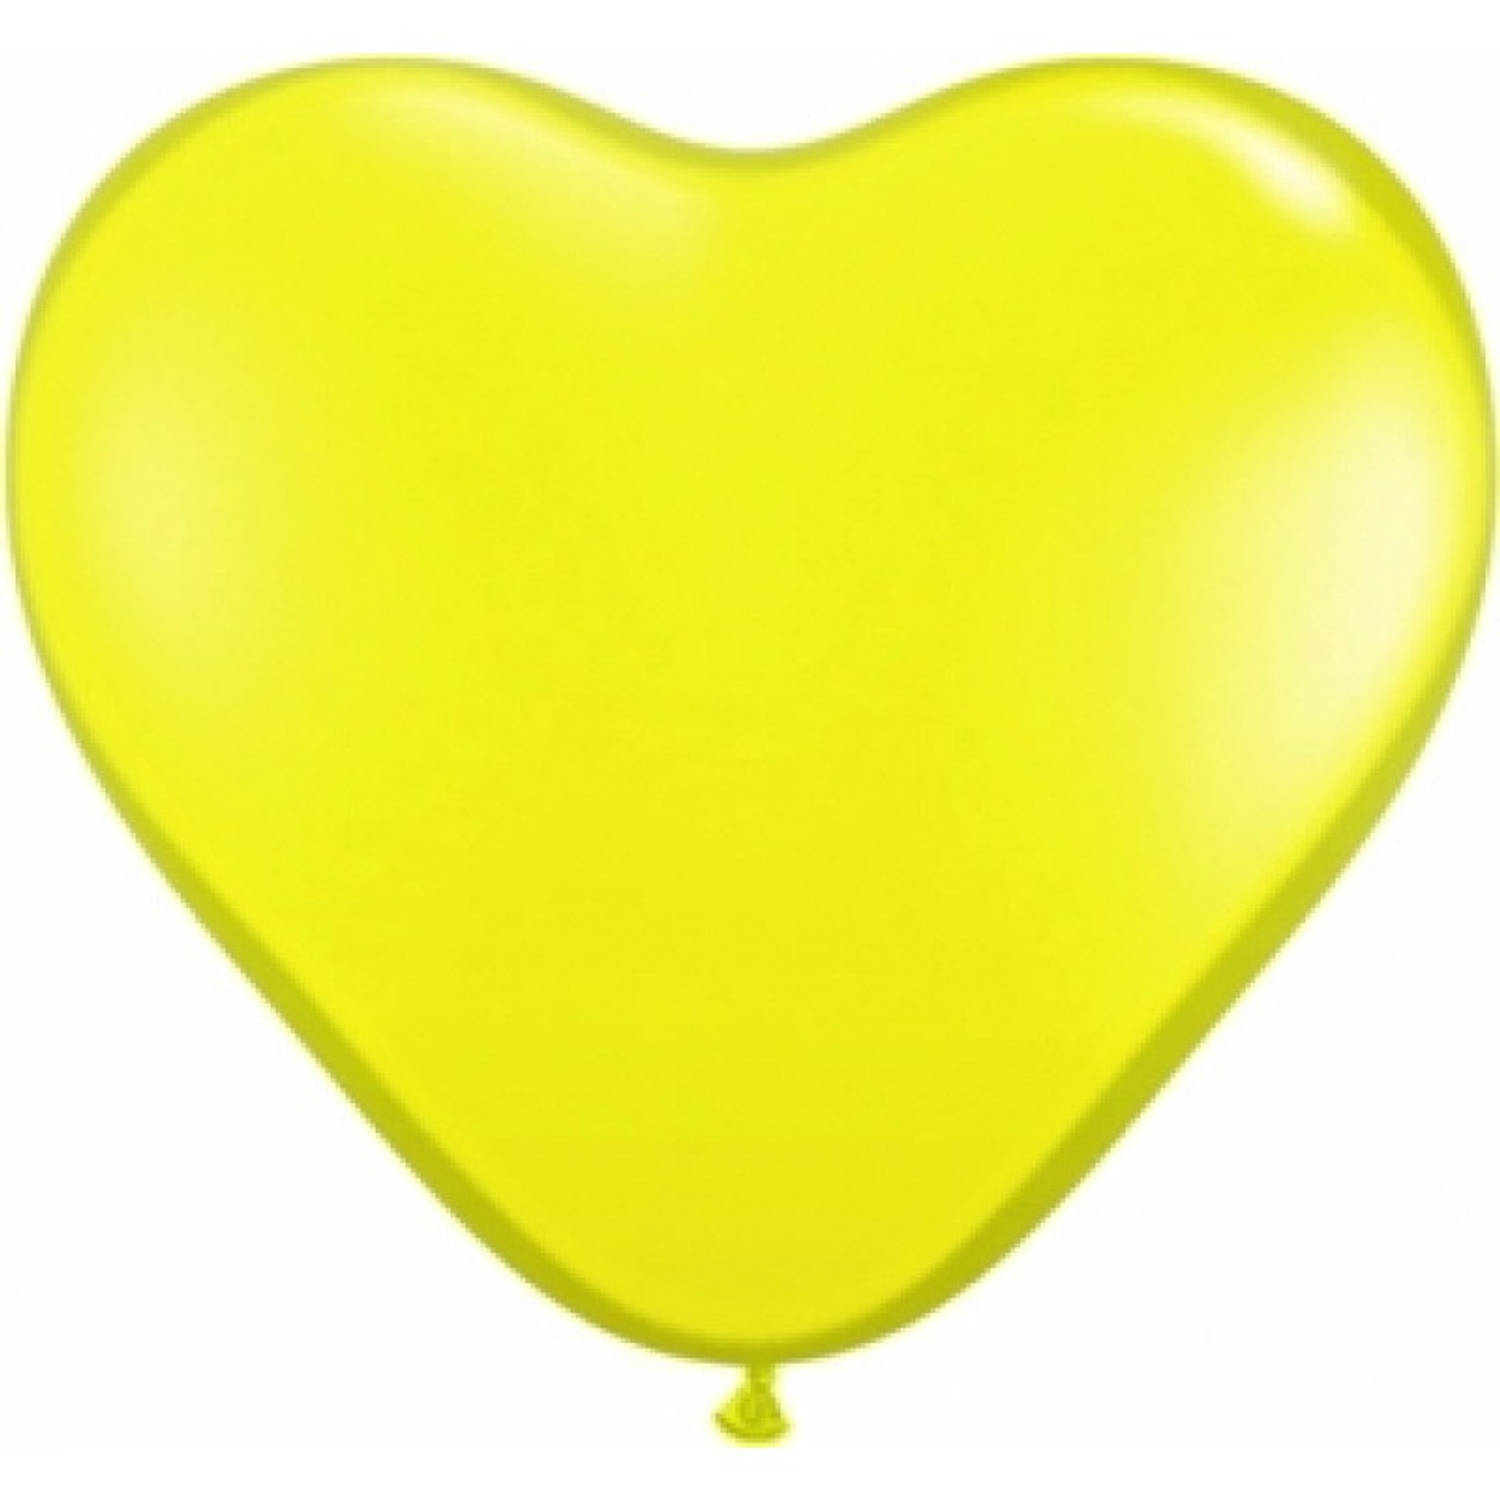 Knooppunt vrachtauto dynastie 15x Hart ballonnen geel - Ballonnen | Blokker